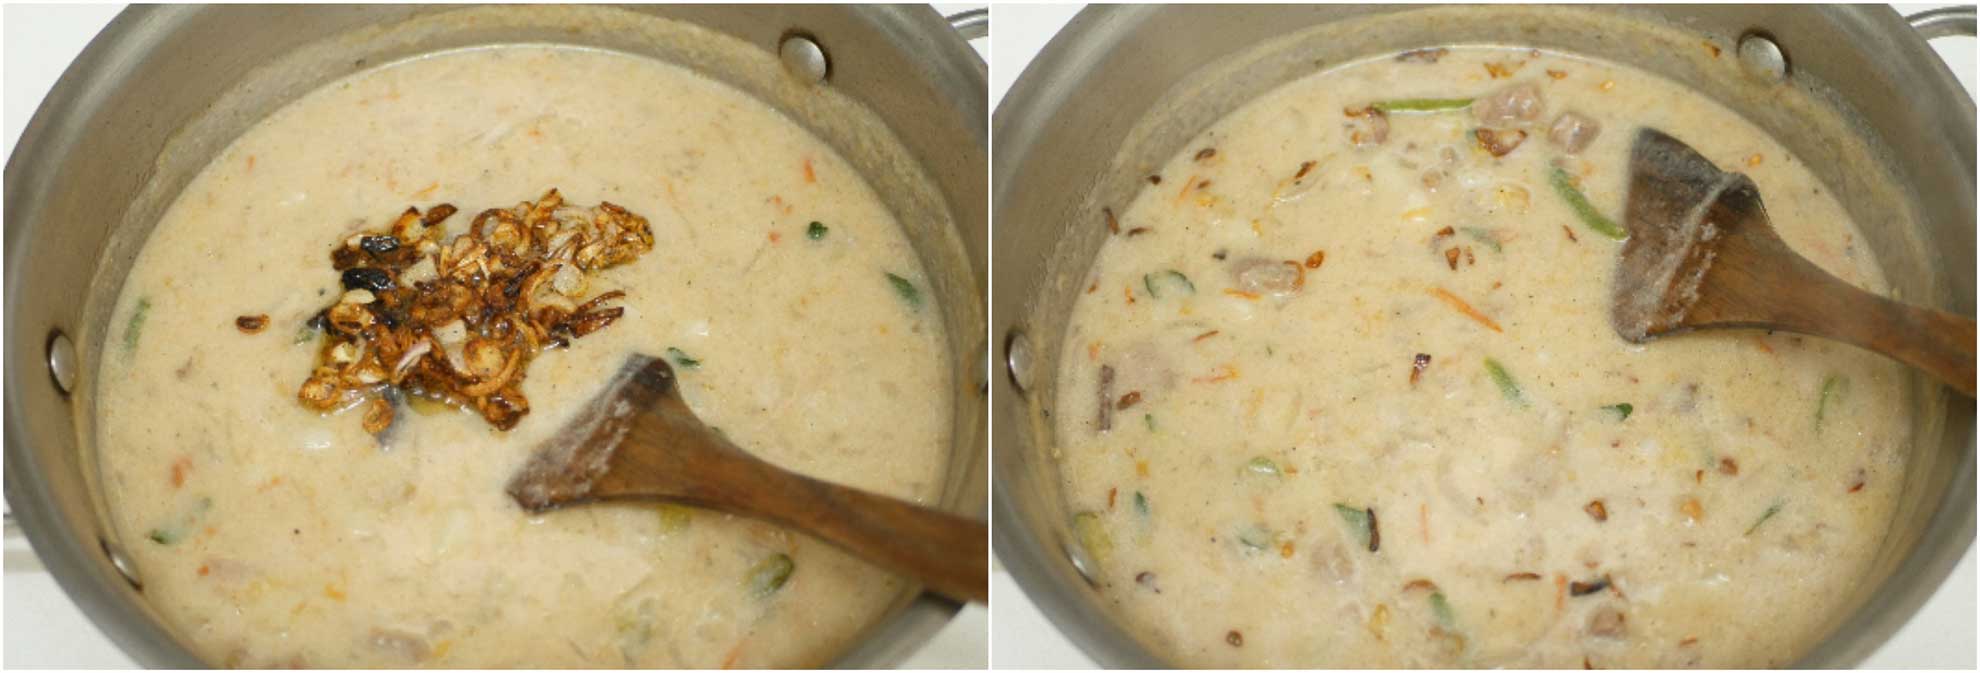 kerala-mutton-stew-recipe-for-appam-16